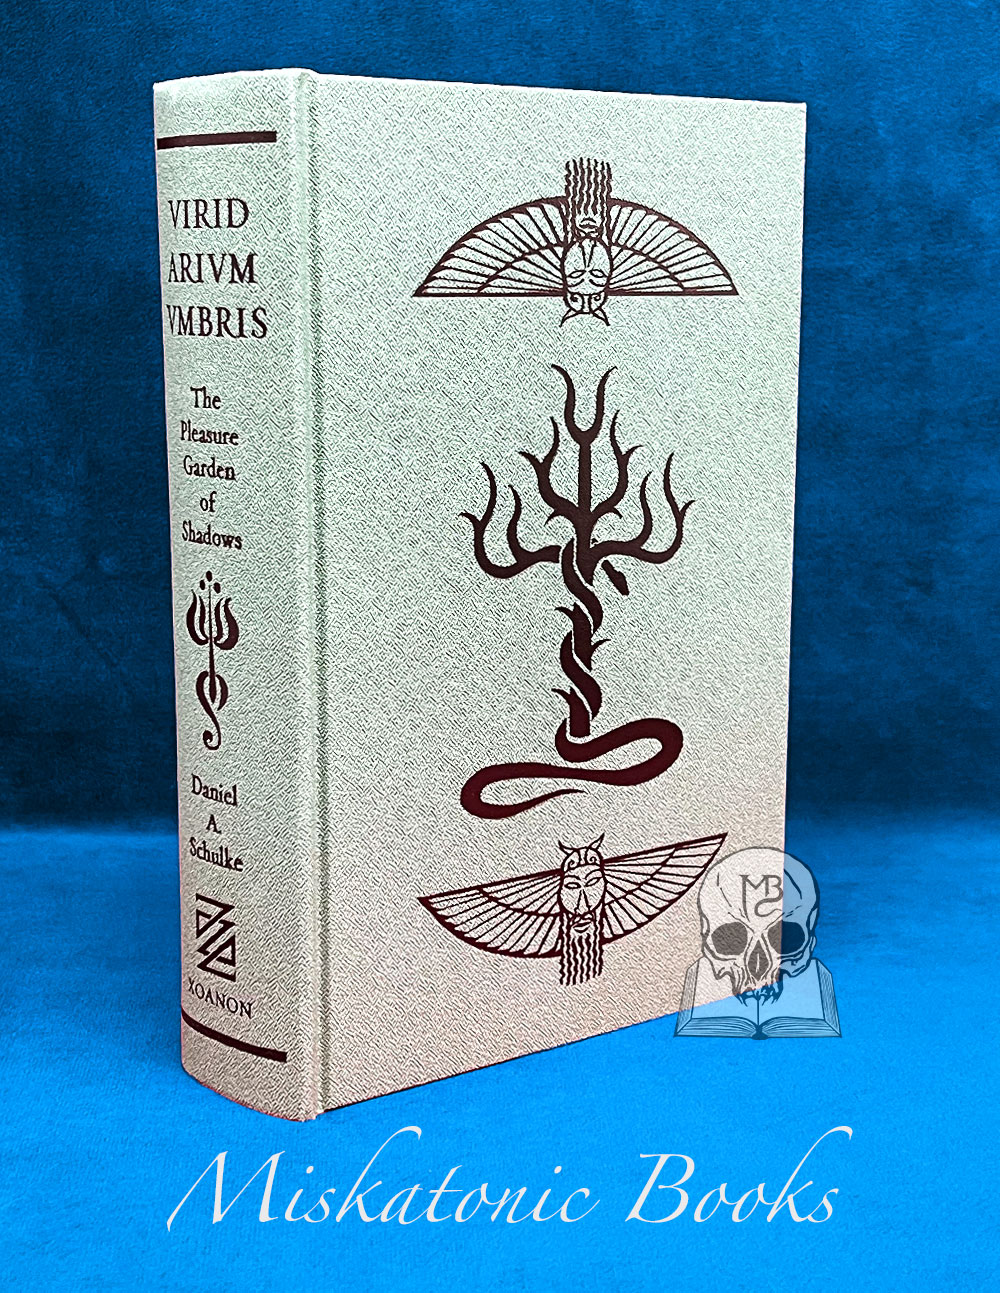 VIRIDARIUM UMBRIS by Daniel Schulke - Limited Edition Hardcover